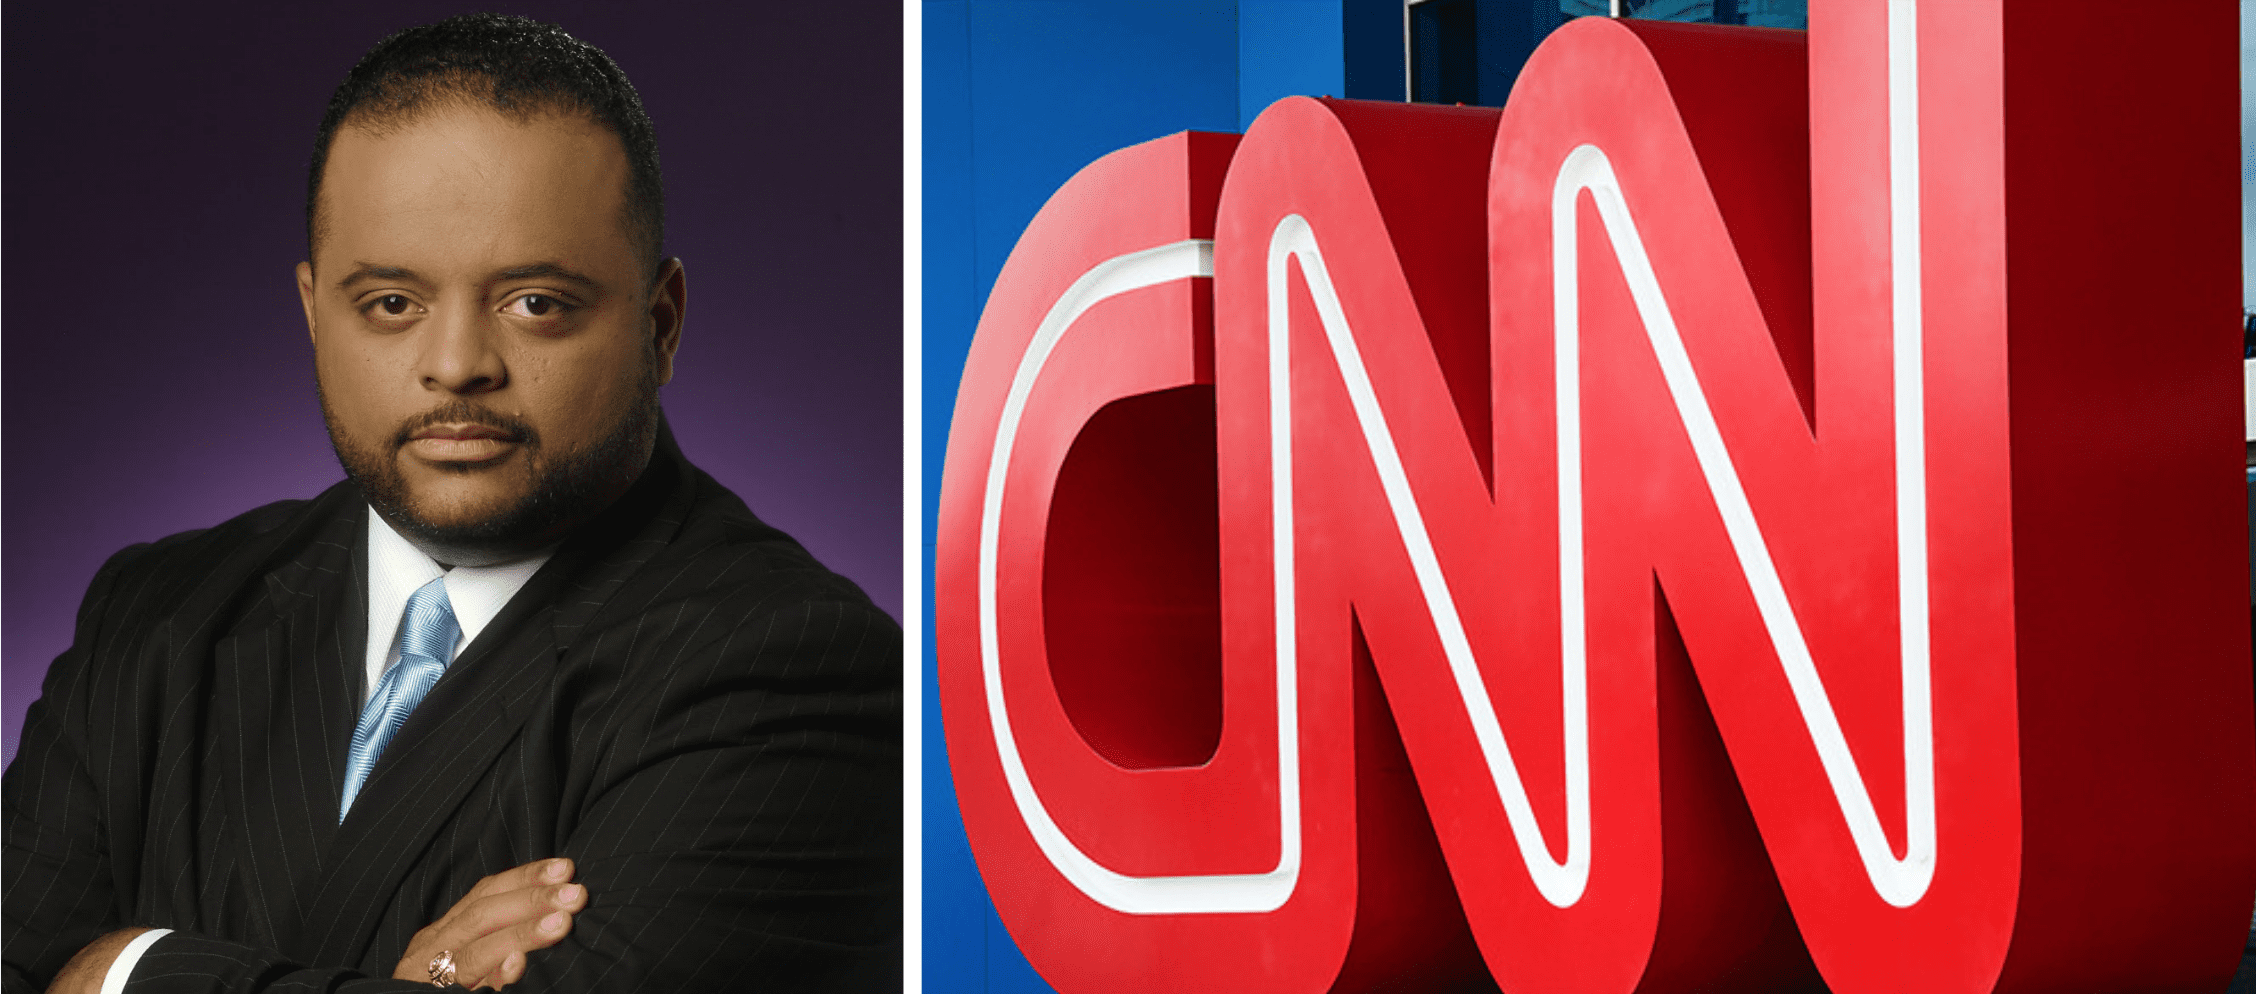 roland martin and the CNN logo.